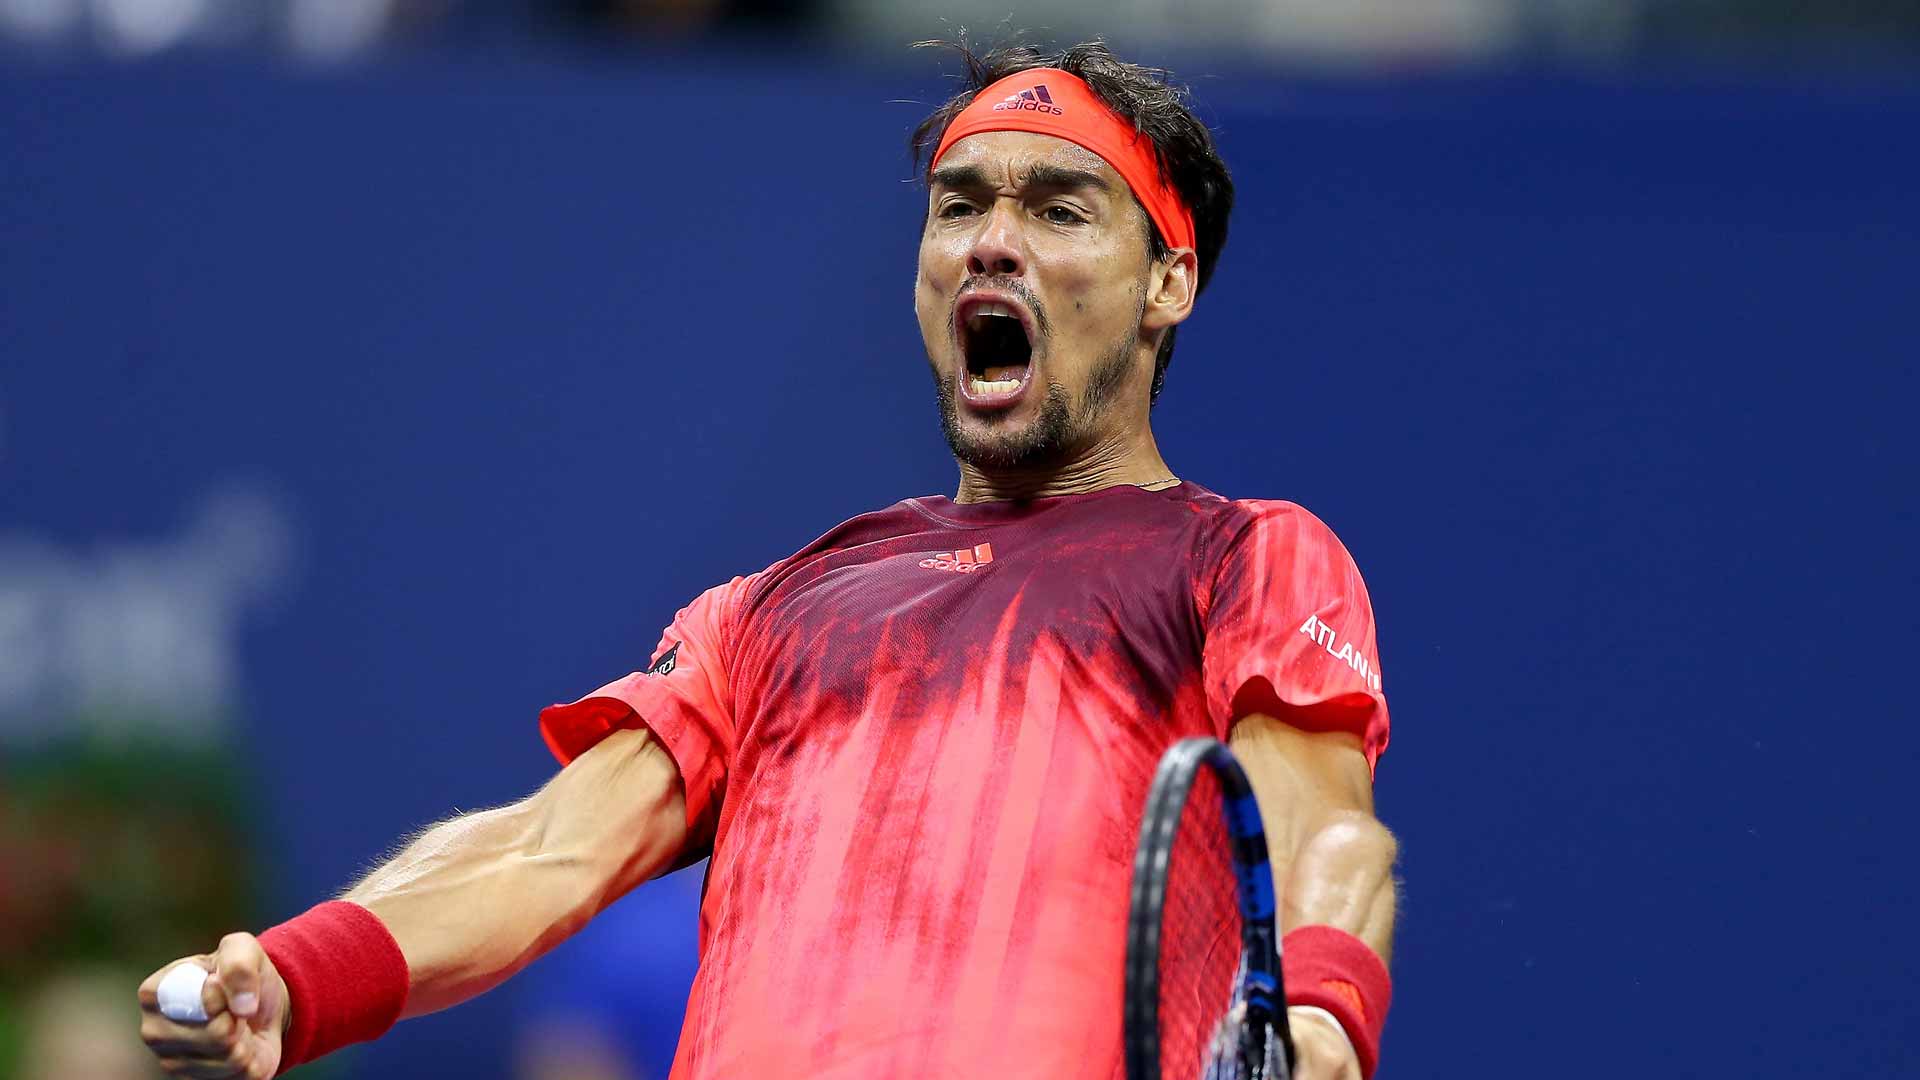 Fognini – Nadal Tip US Open 01.09.2022